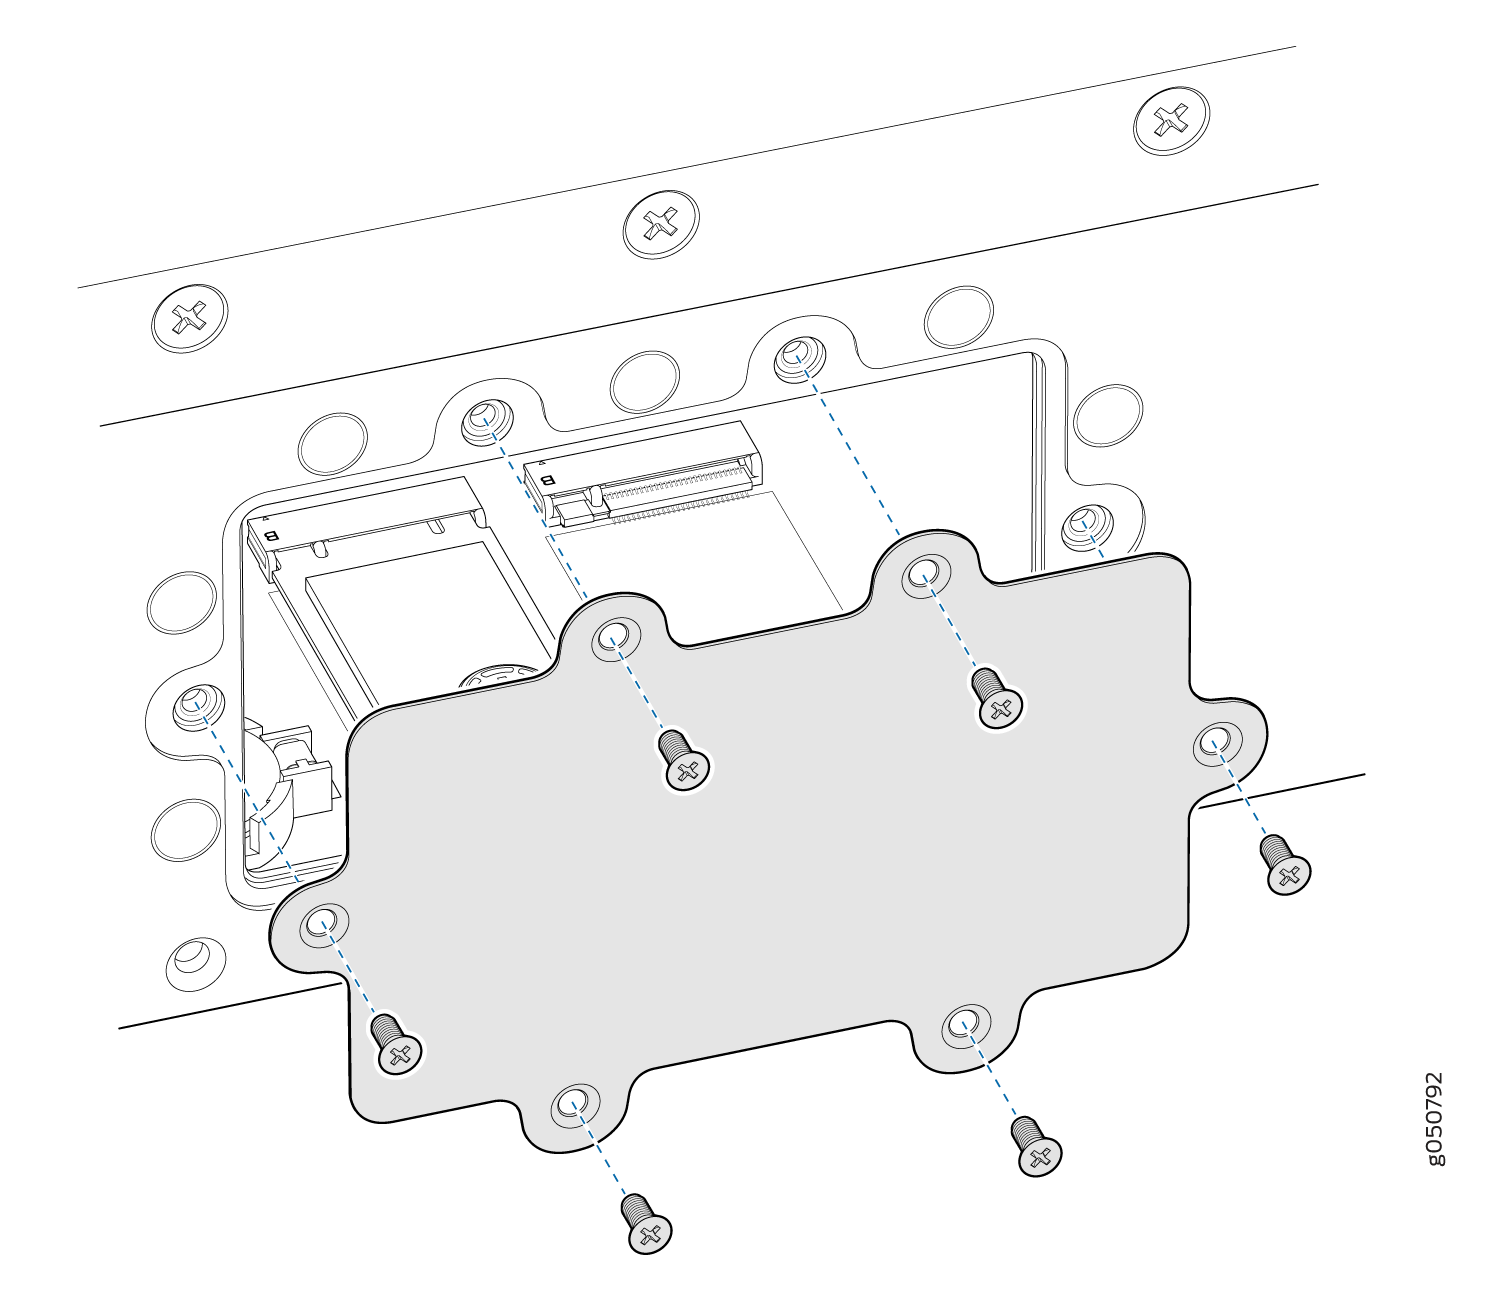 Removing or Replacing Flat-head Screws in the Access Door